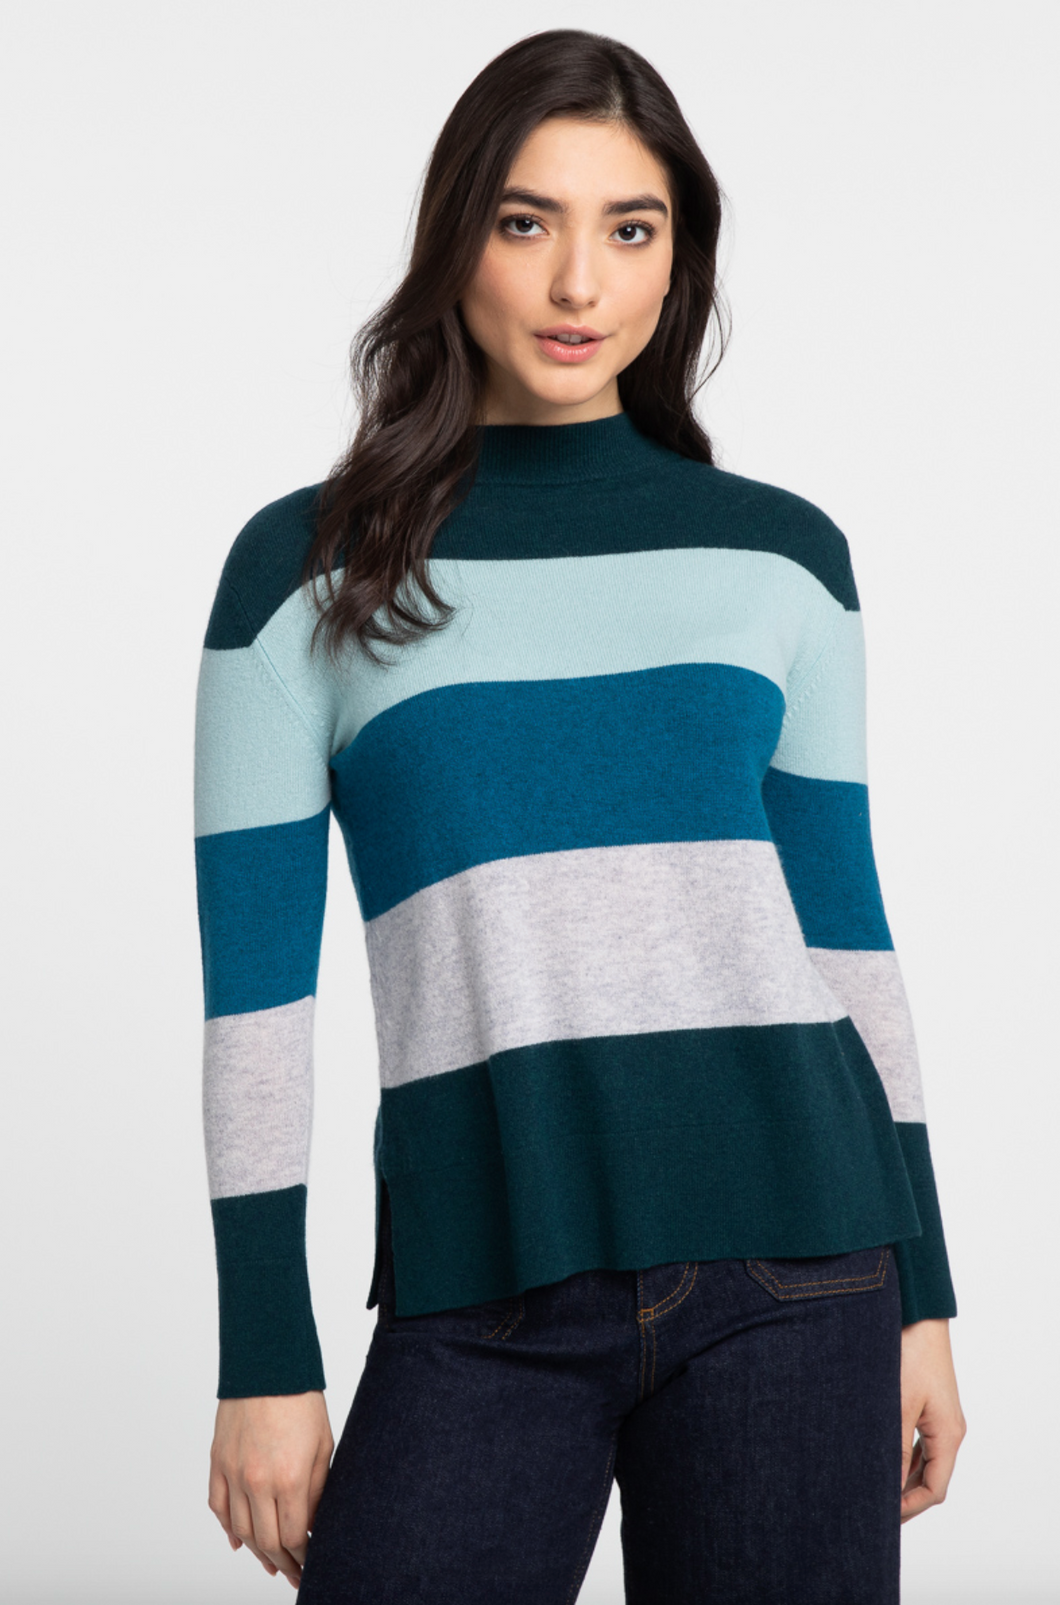 Kinross Cashmere Sweater in Seapine Multi